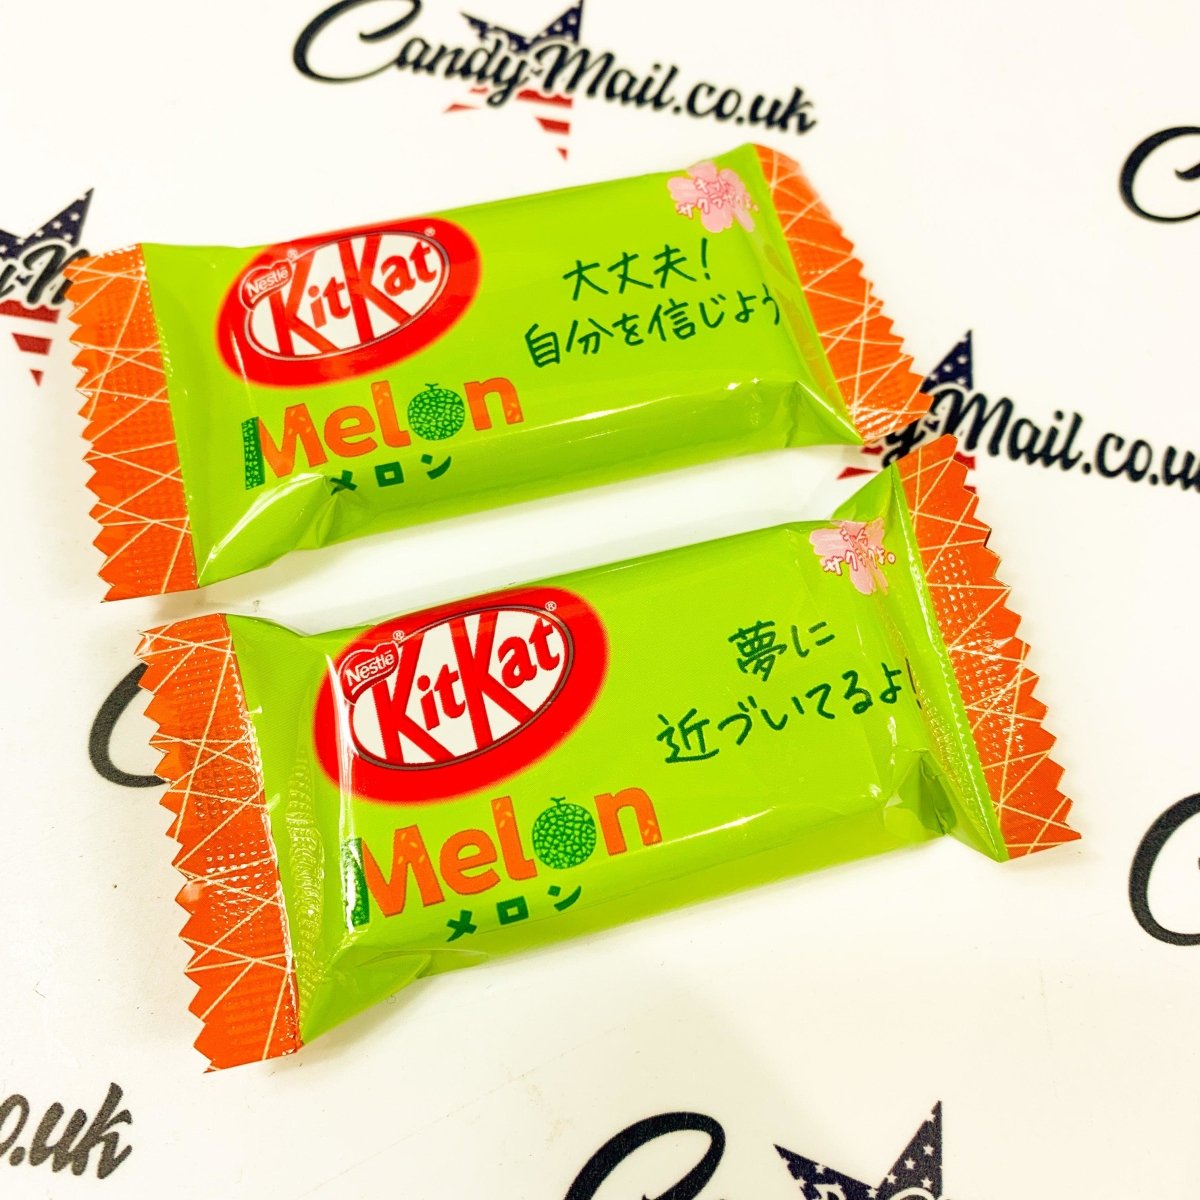 Kit Kat Japanese Melon Flavour Single Bar - Candy Mail UK